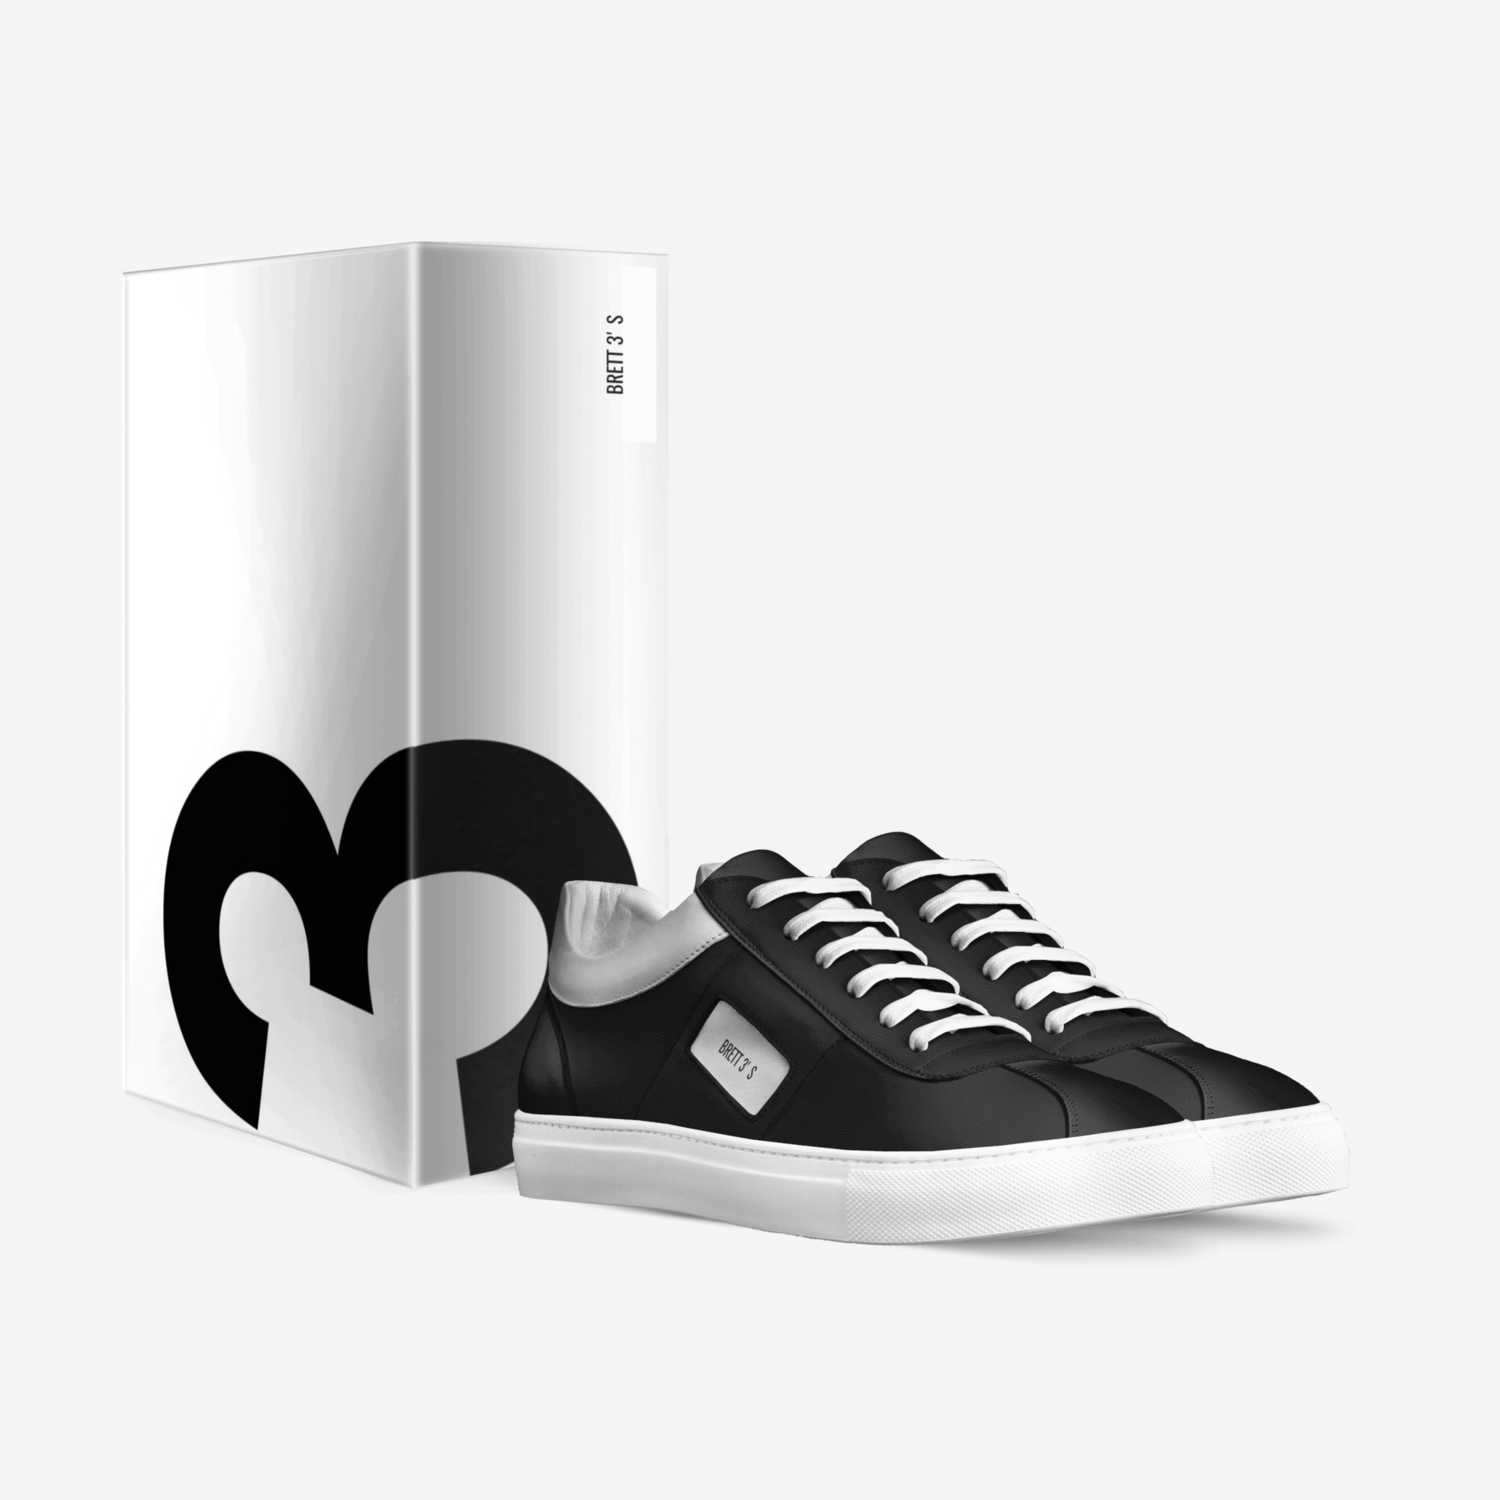 Brett 4' S custom made in Italy shoes by Brett Staloch | Box view